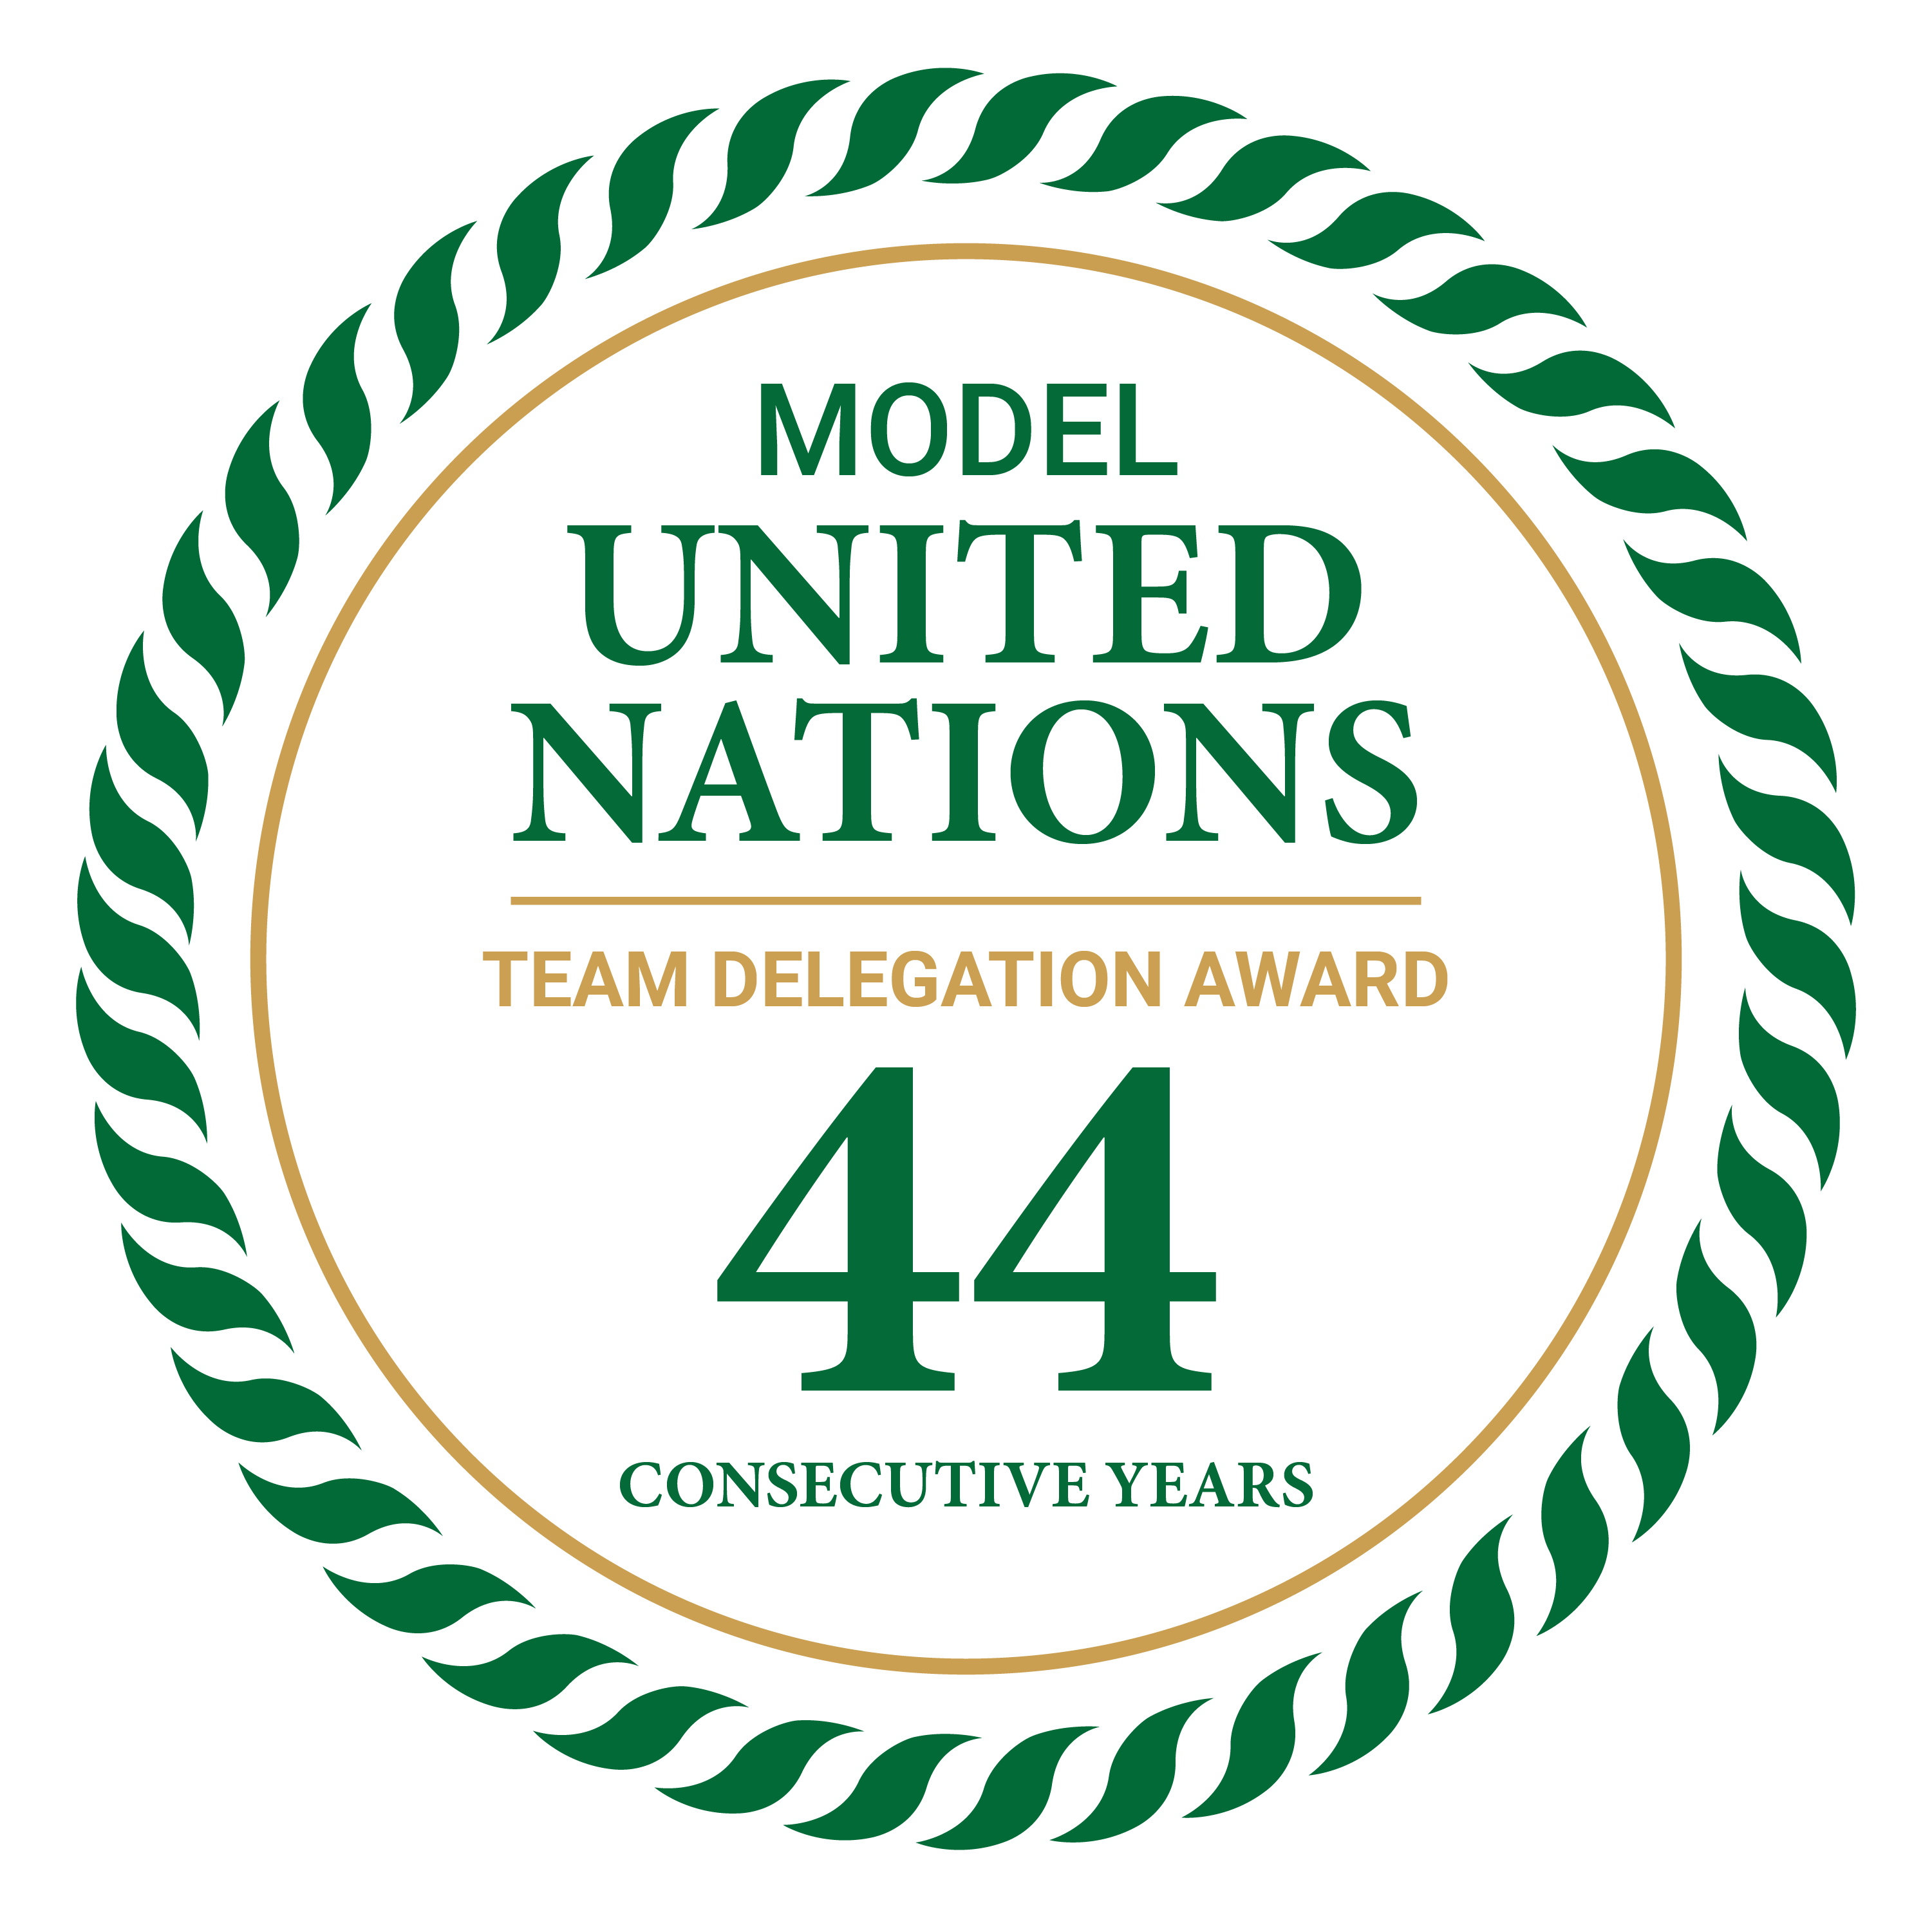 Model United Nations Team Delegation Award 42 Consecutive Years